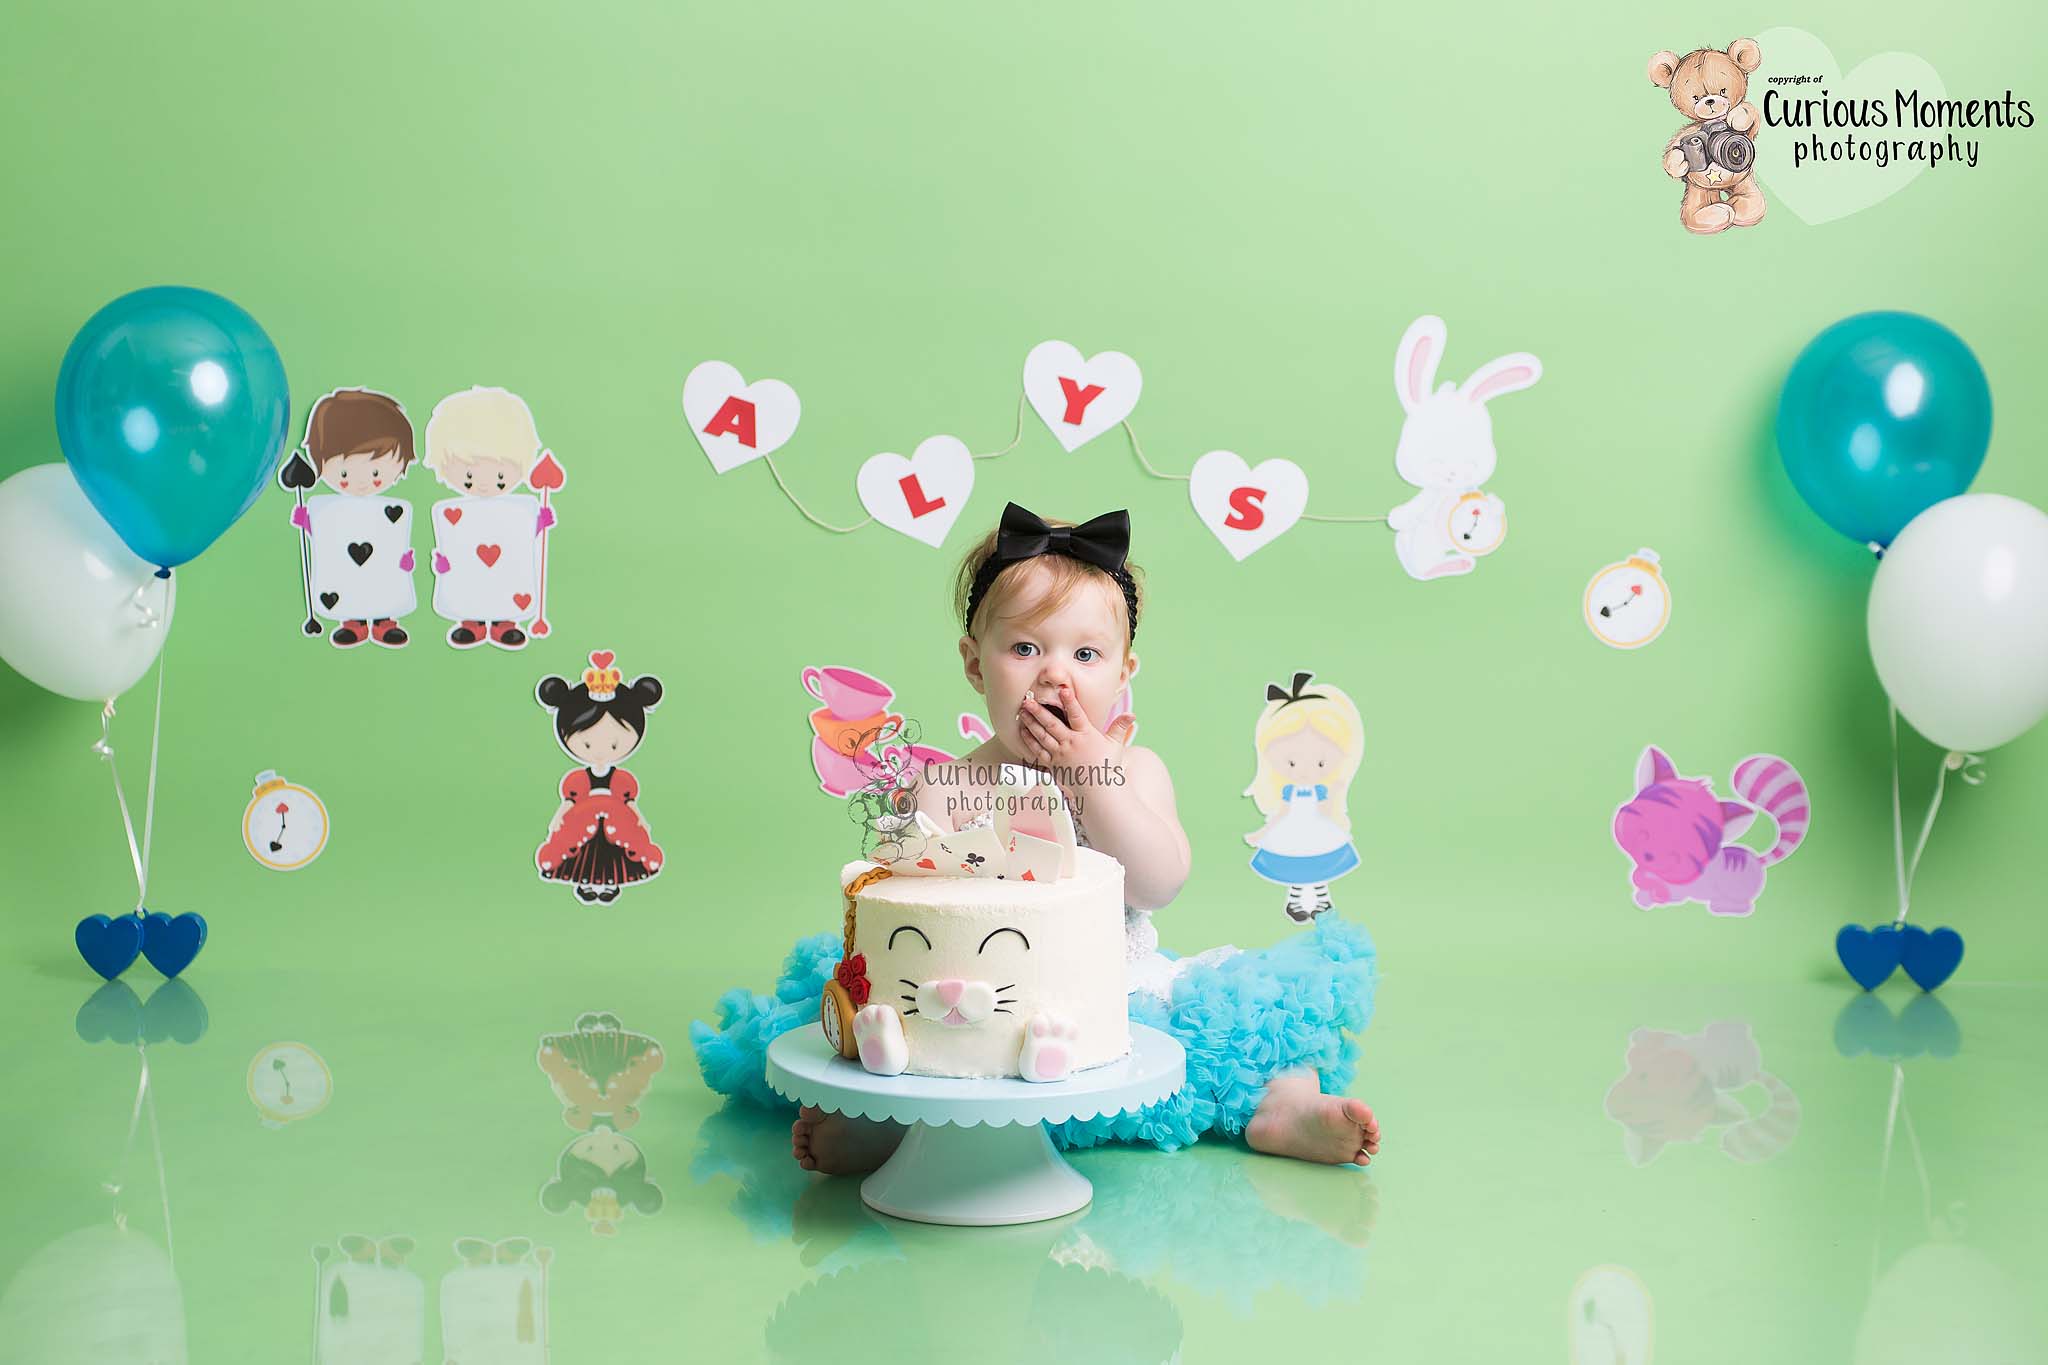 baby girl eating cake during her Alice in wonderland themed cake smash